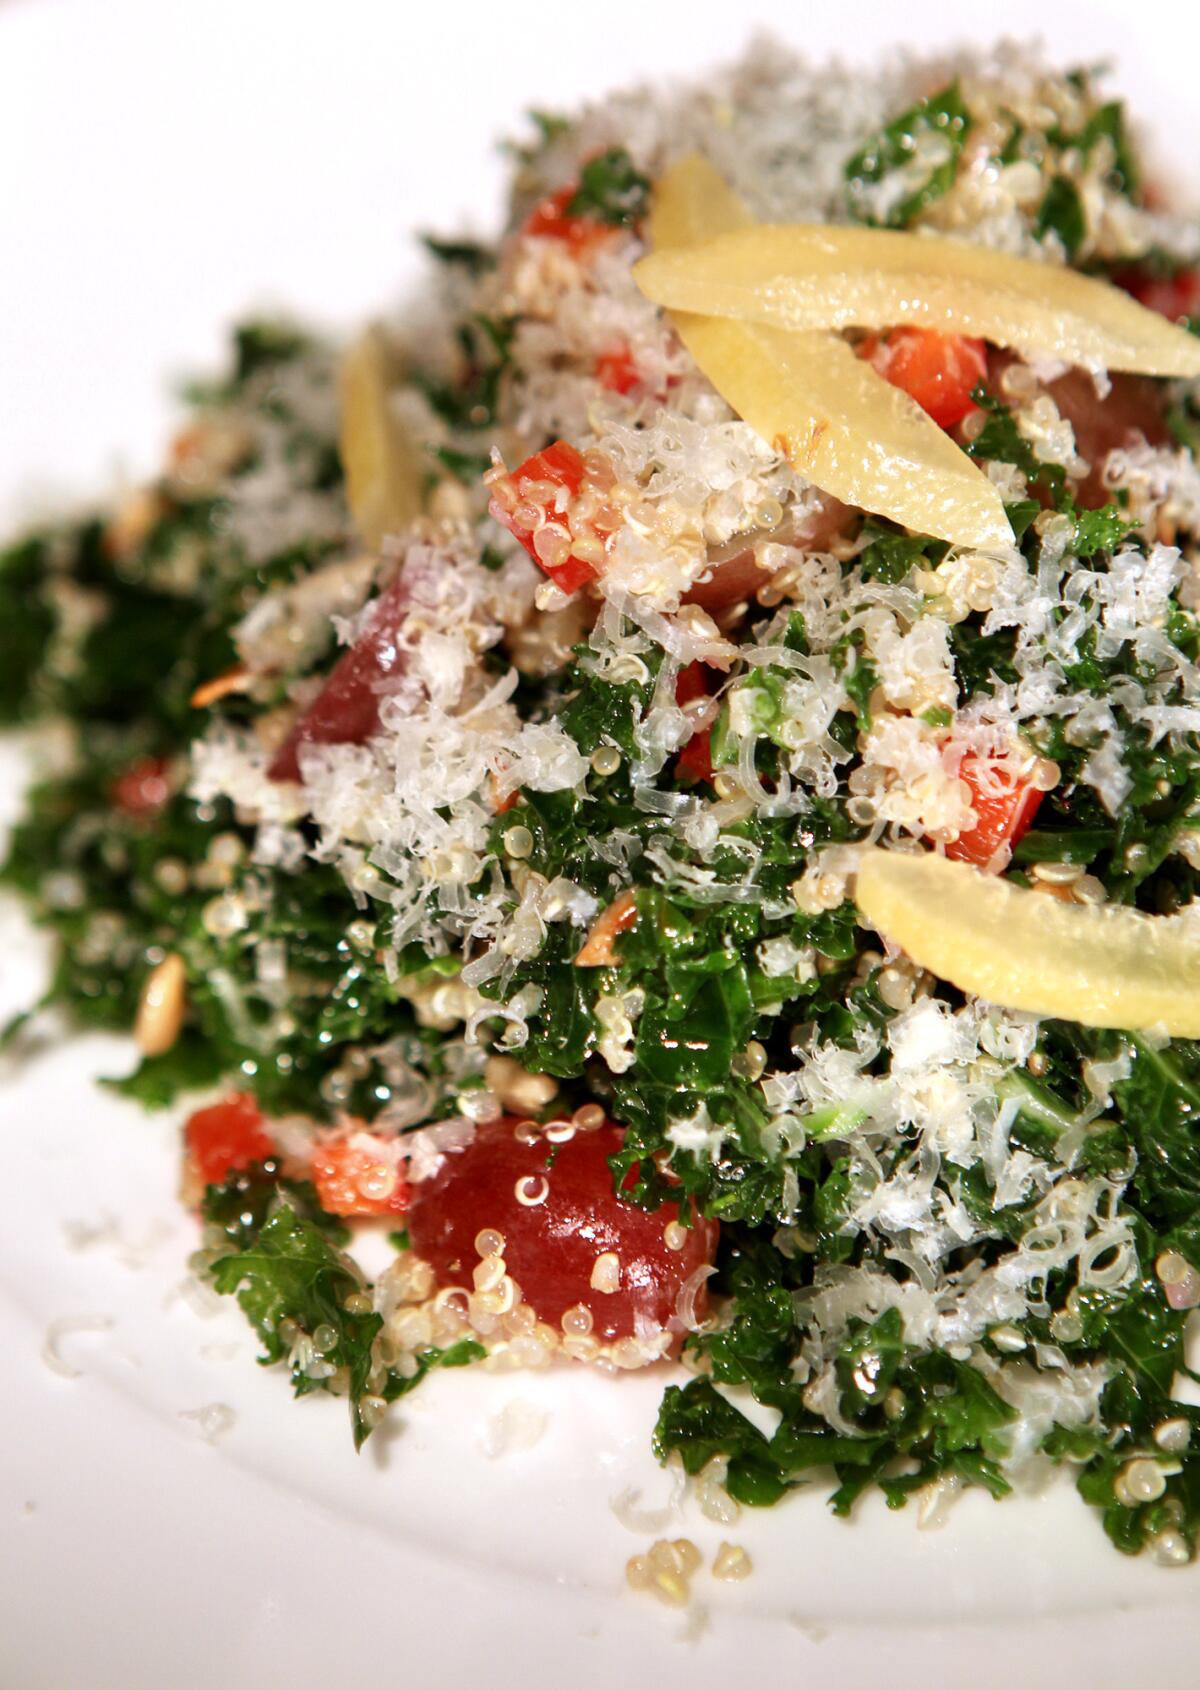 Kale and quinoa salad from La Grande Orange Cafe in Pasadena. Recipe.